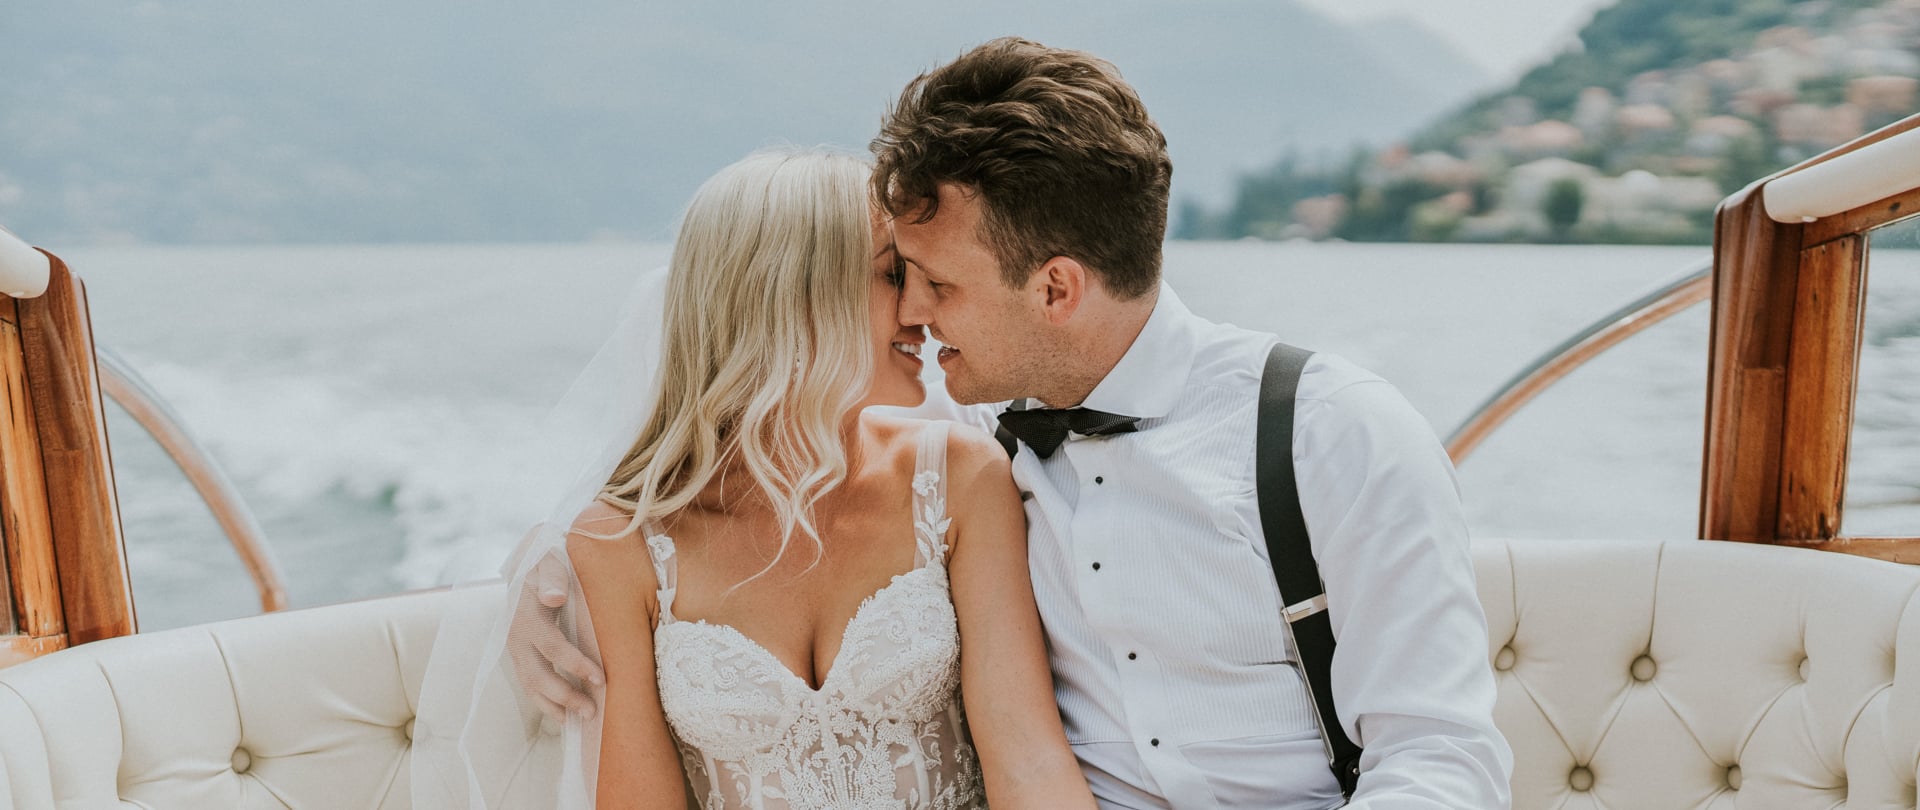 Kelly & Ben Wedding Video Filmed at Lake Como, Italy